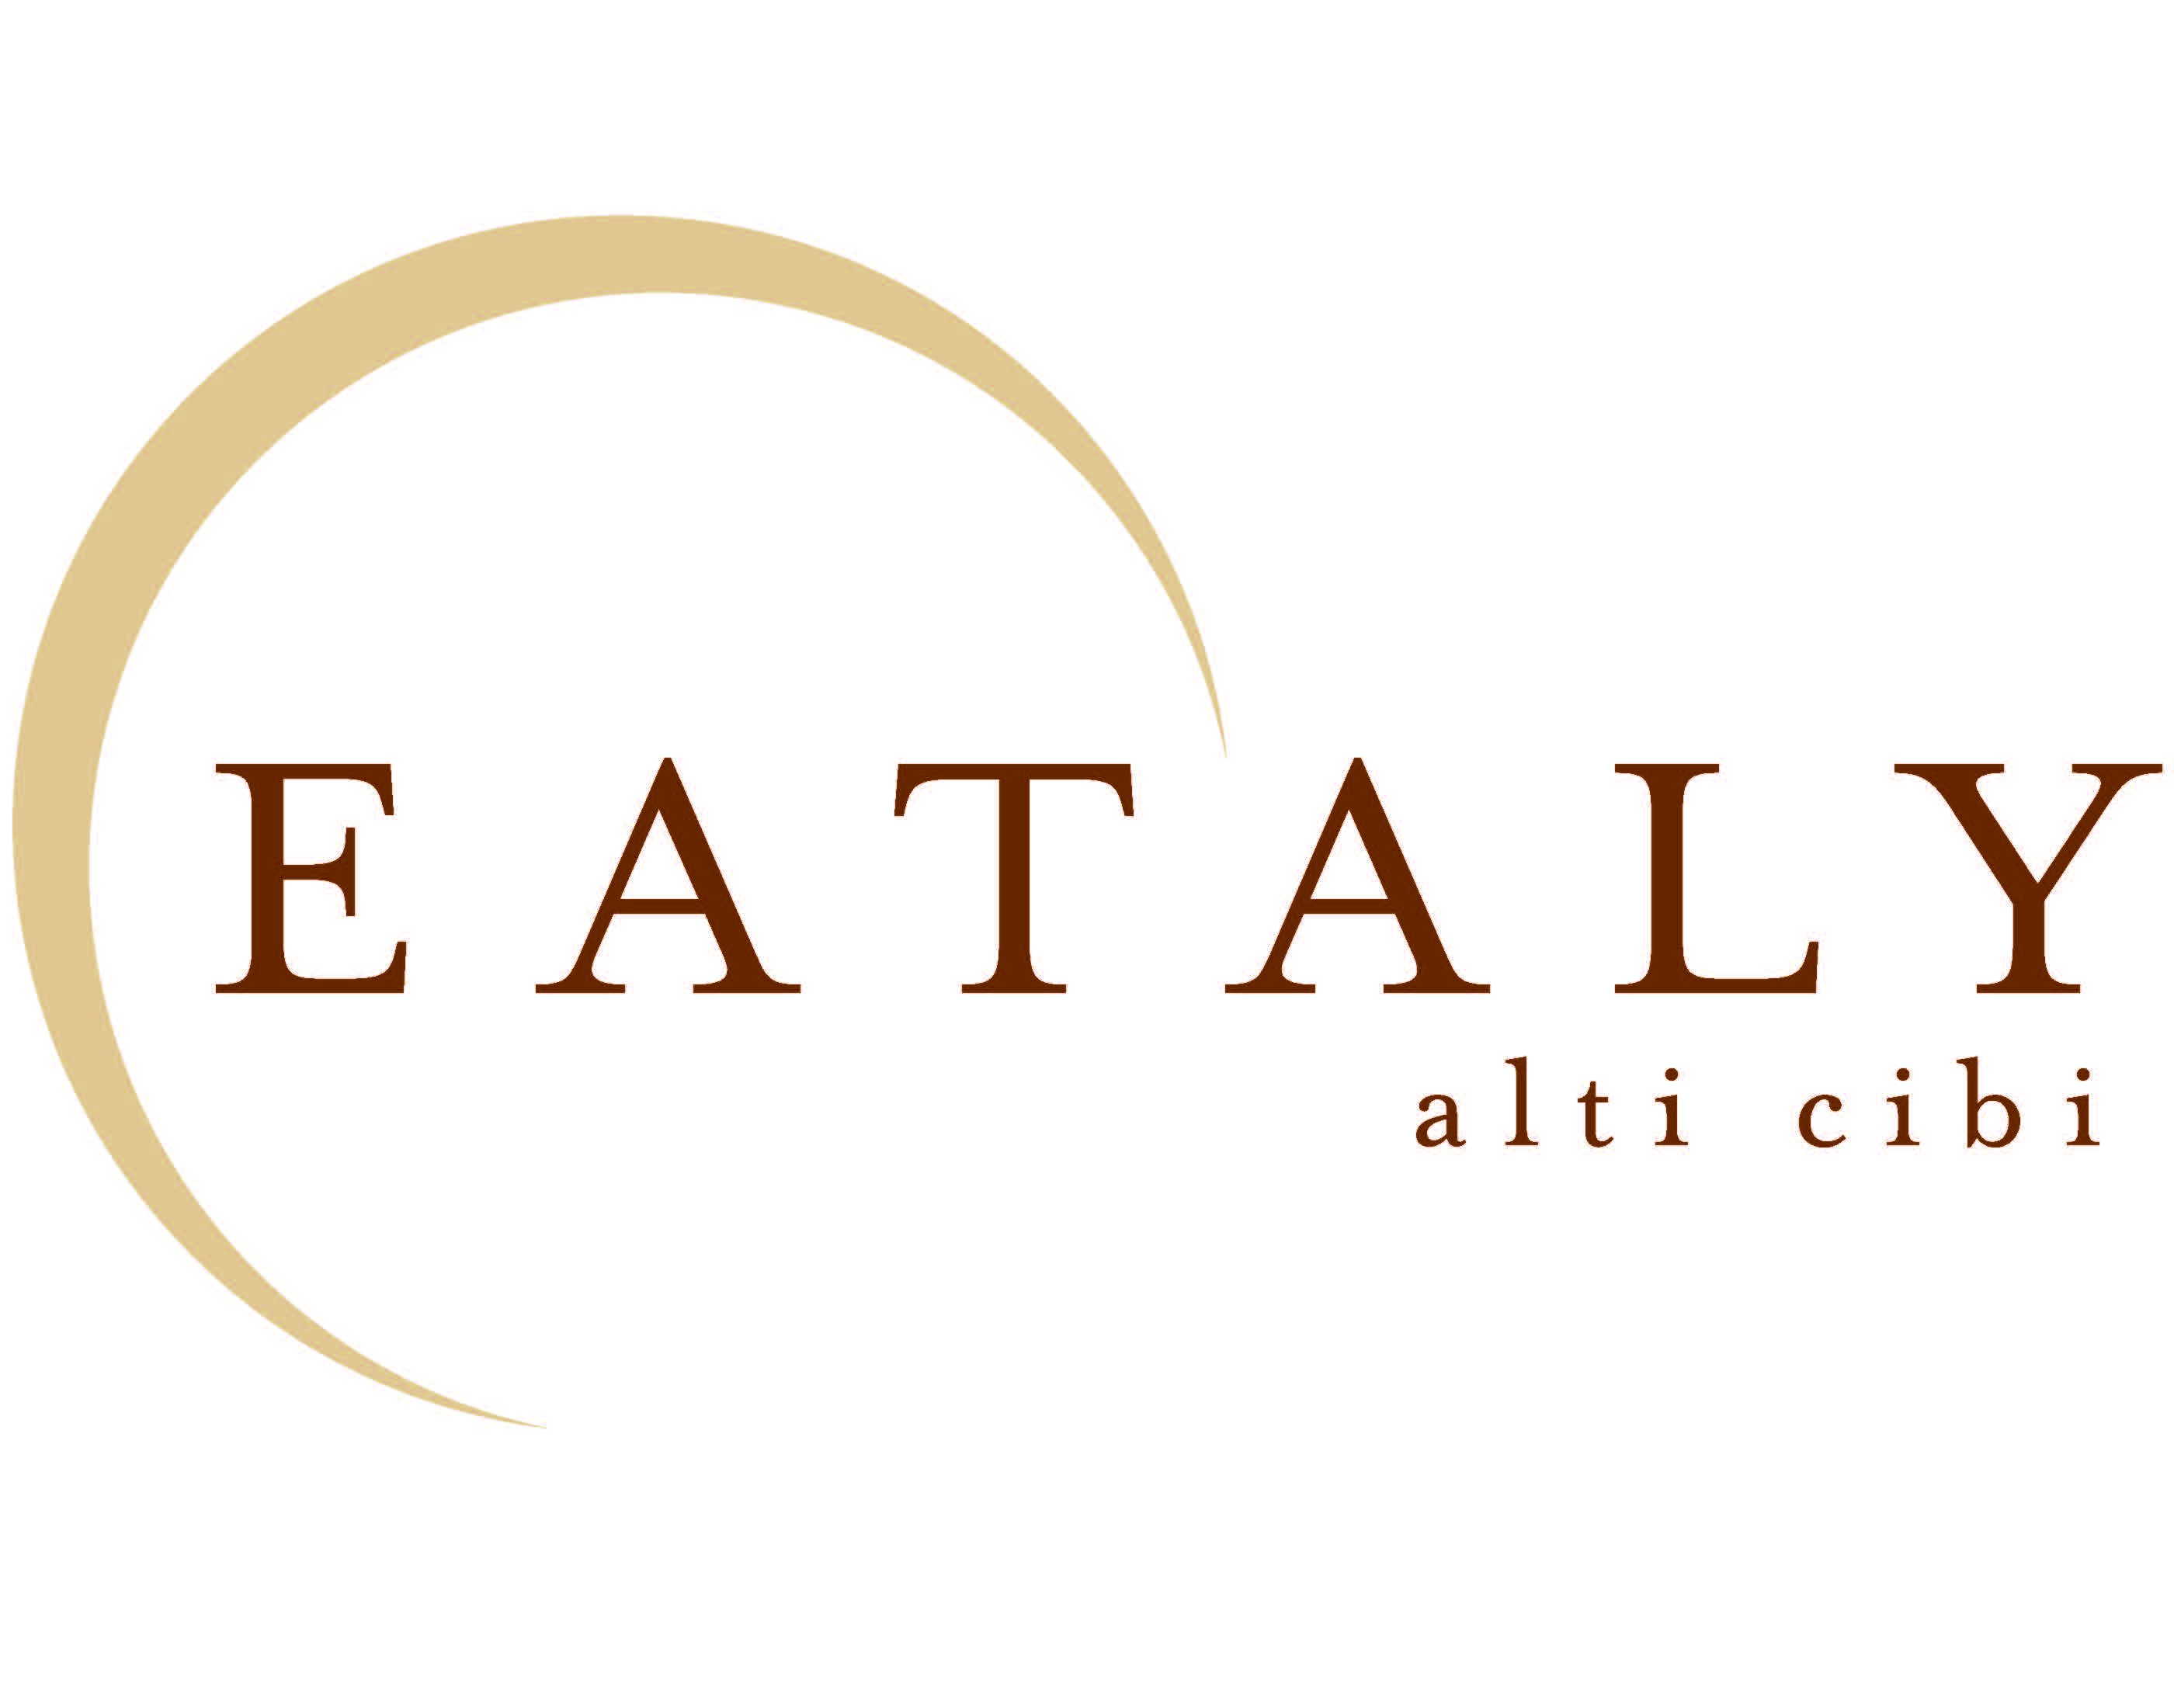 Eataly logo 11x14 2